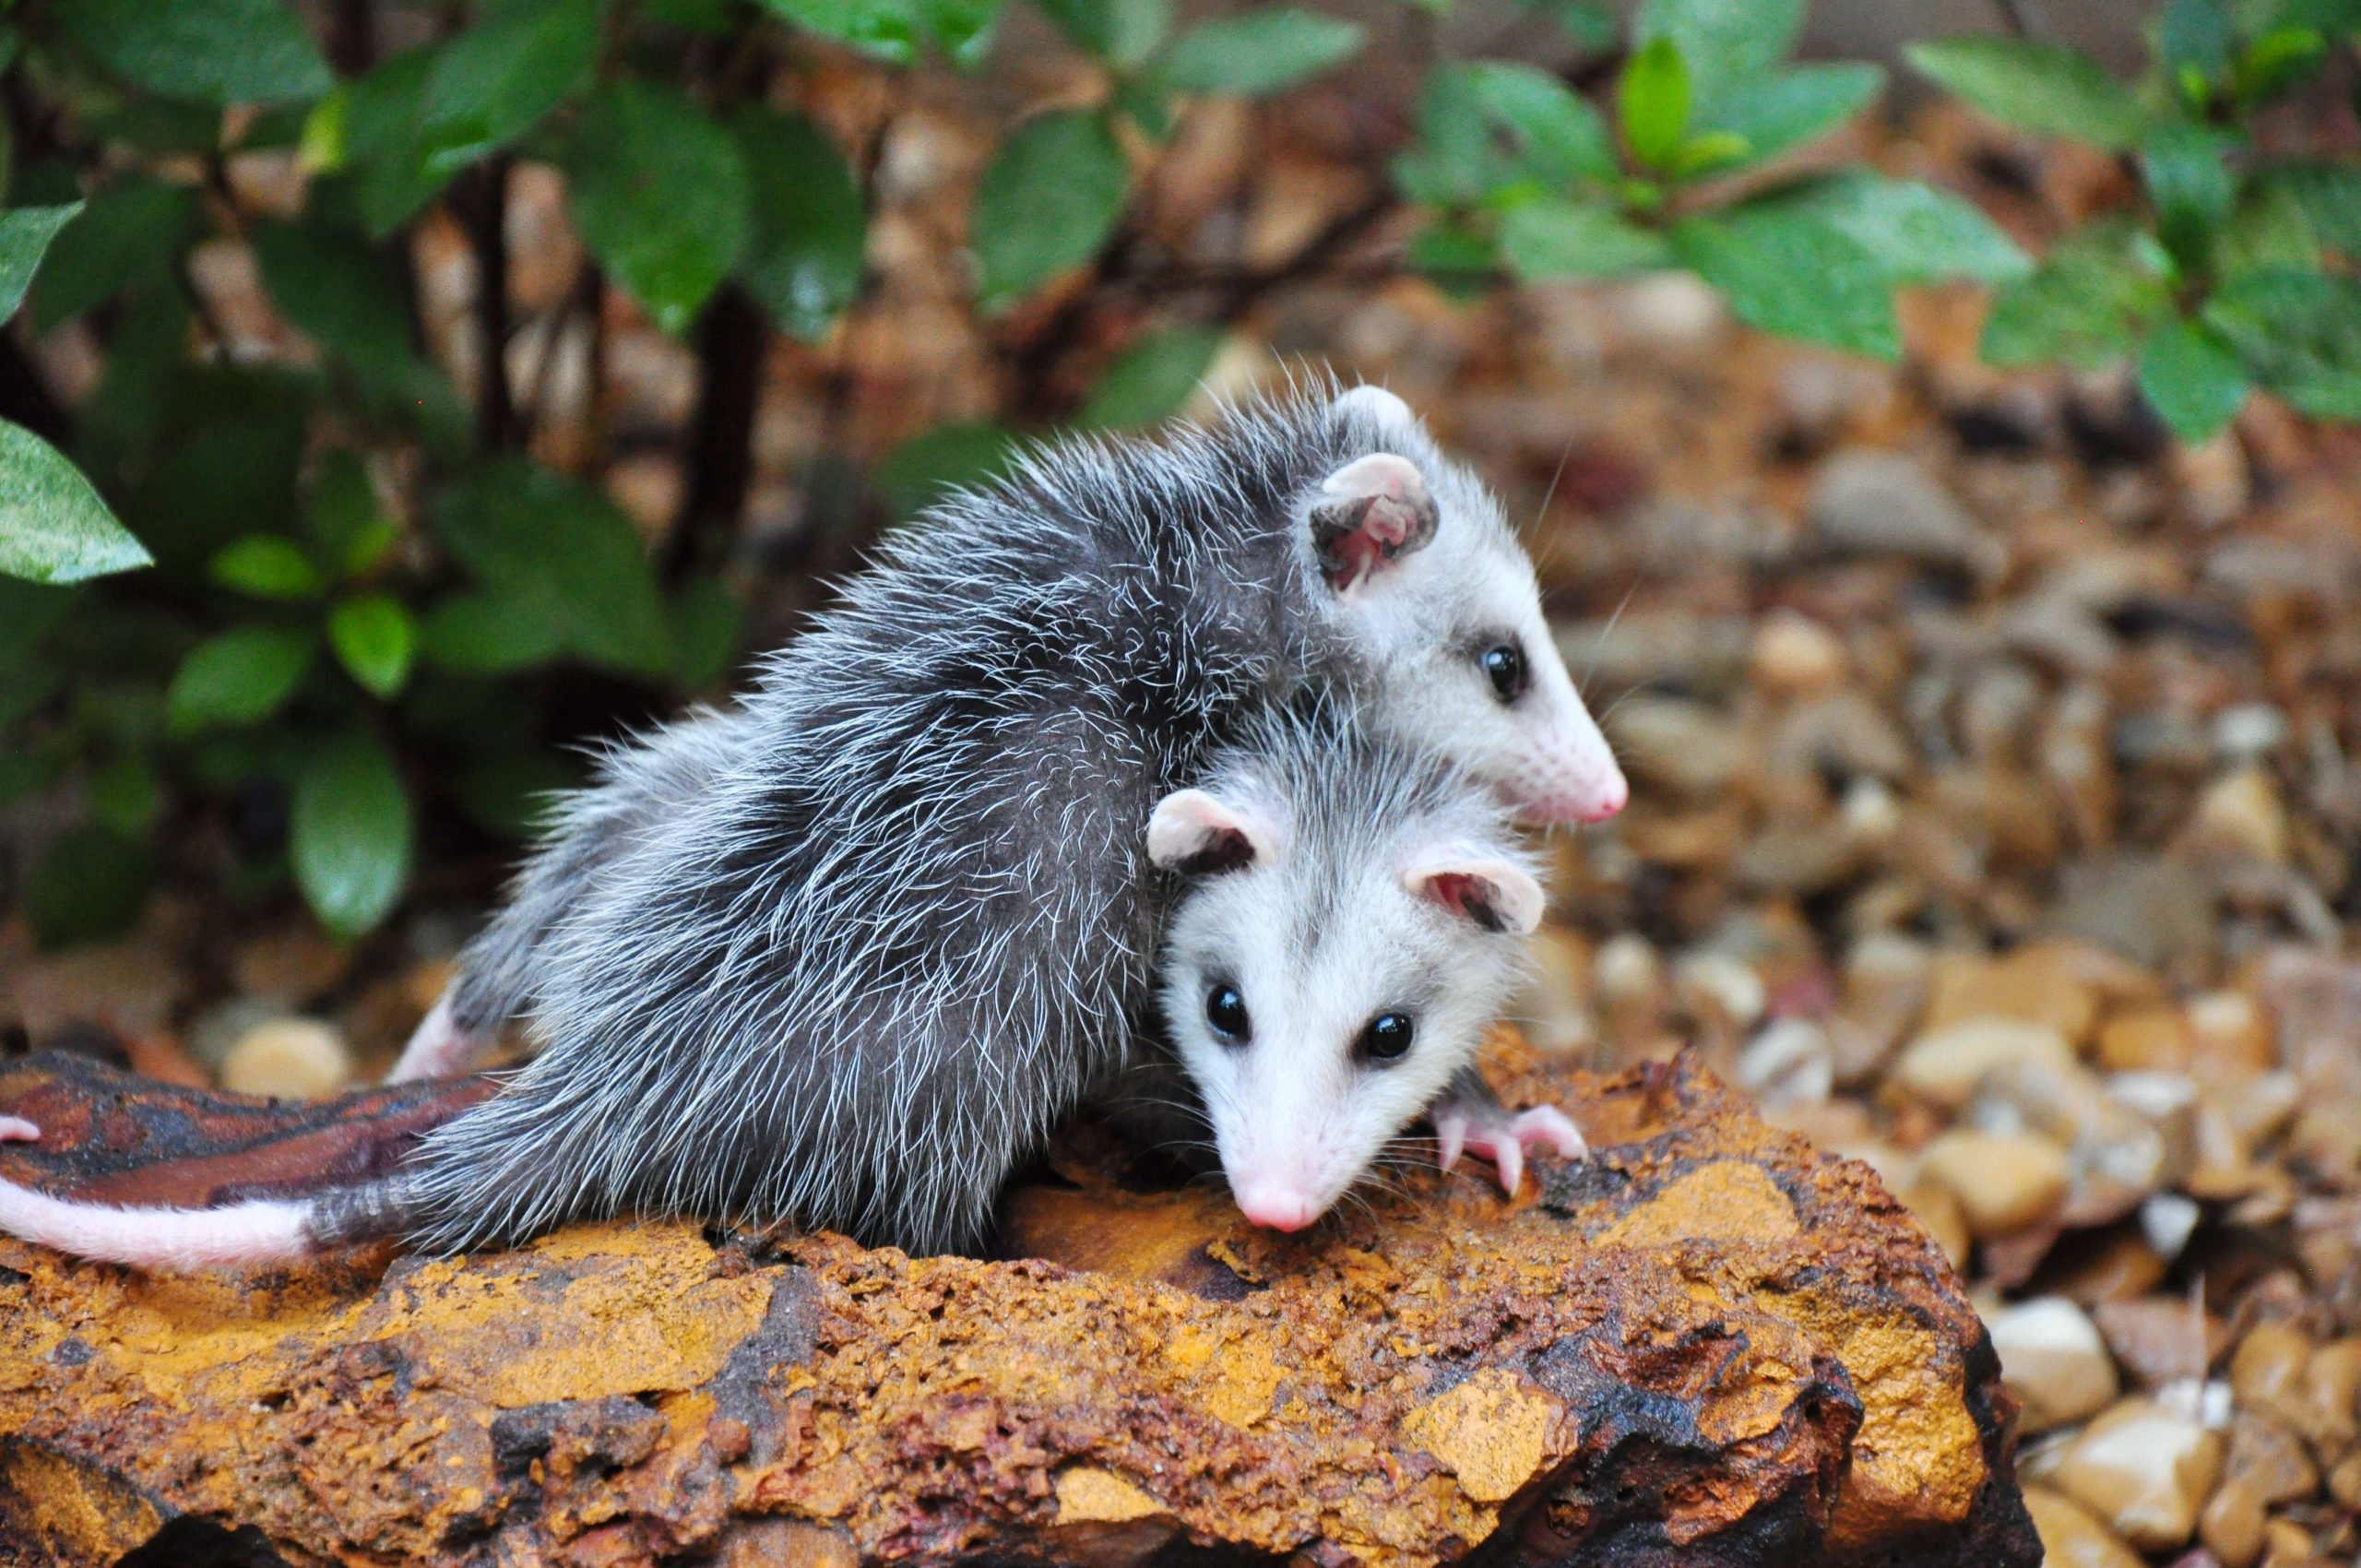 Possum babies